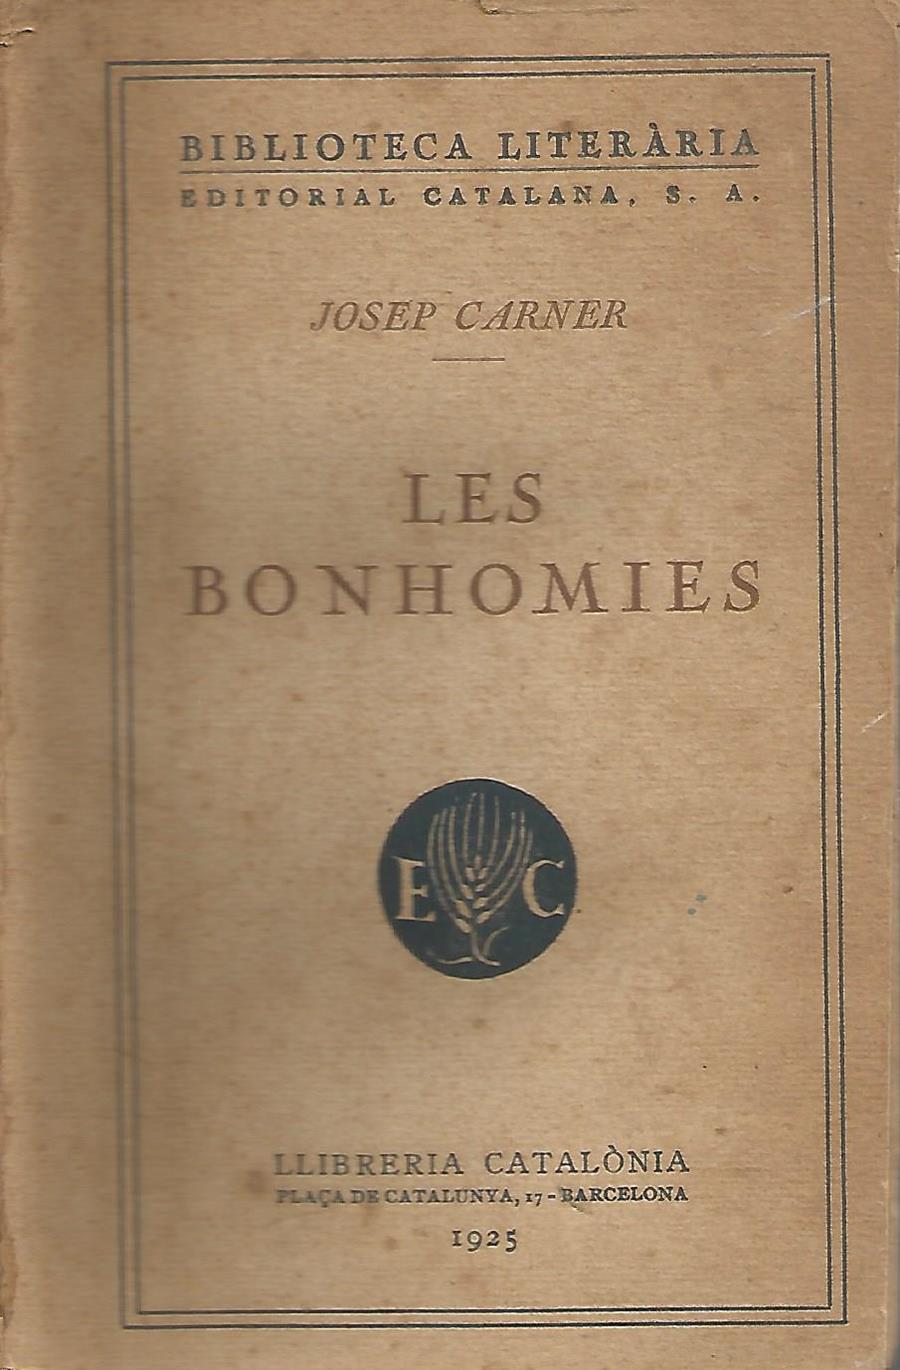 LES BONHOMIES | 9999900208344 | Carner, Josep | Llibres de Companyia - Libros de segunda mano Barcelona